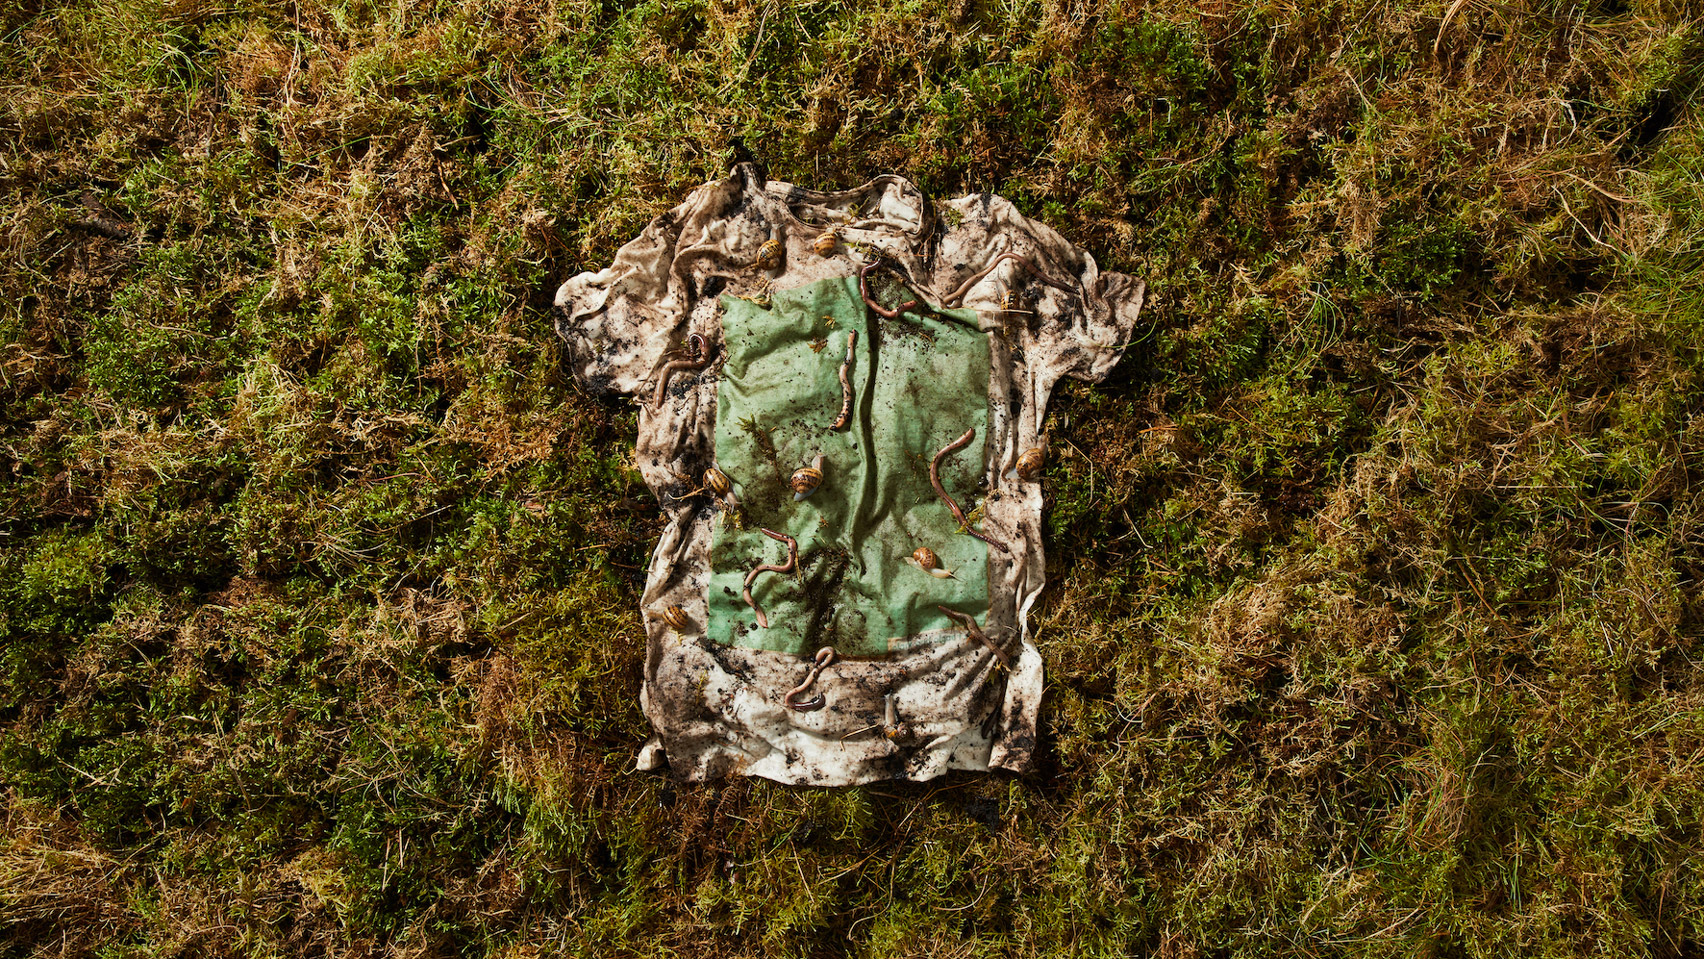 Vollebak's plant algae T-shirt becomes "worm food" in